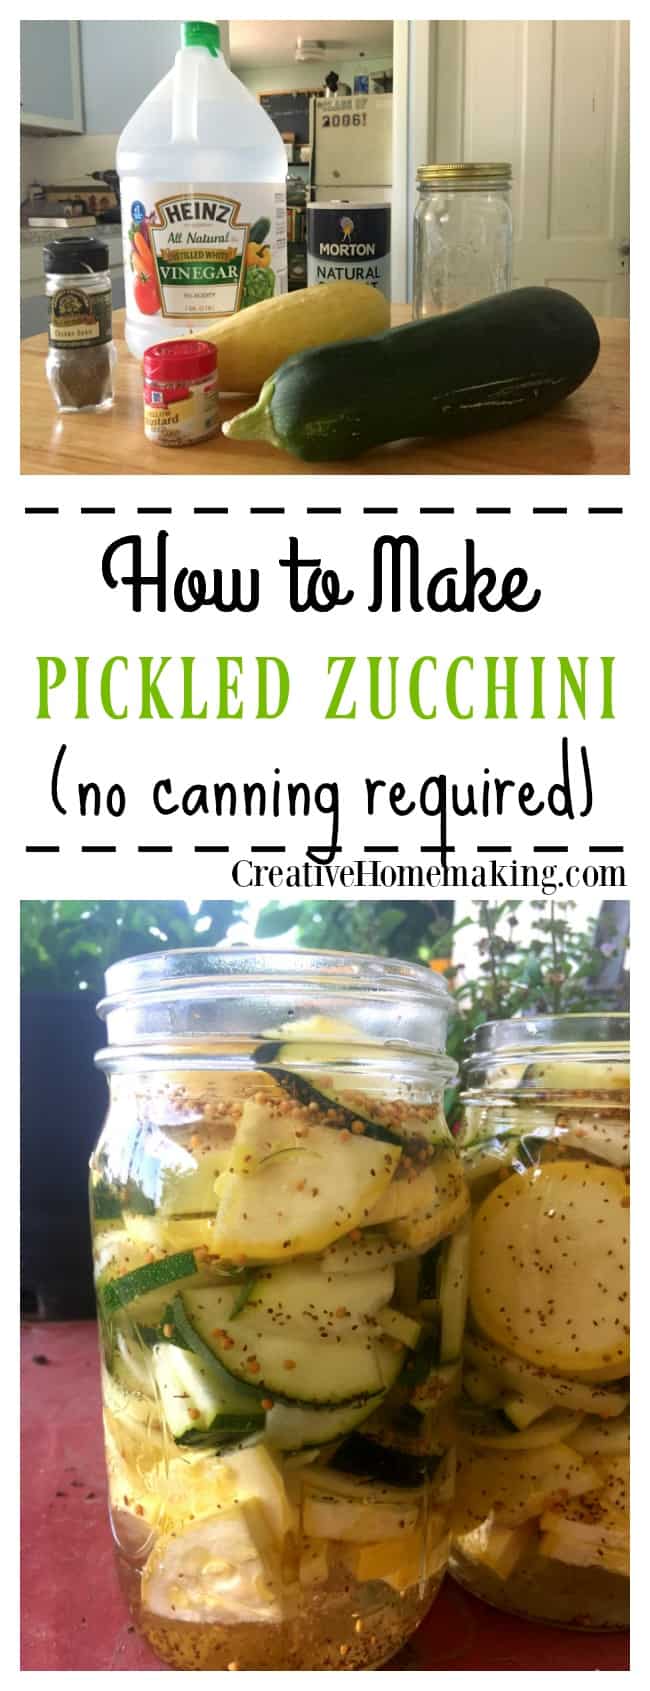 Pickled Zucchini - Creative Homemaking